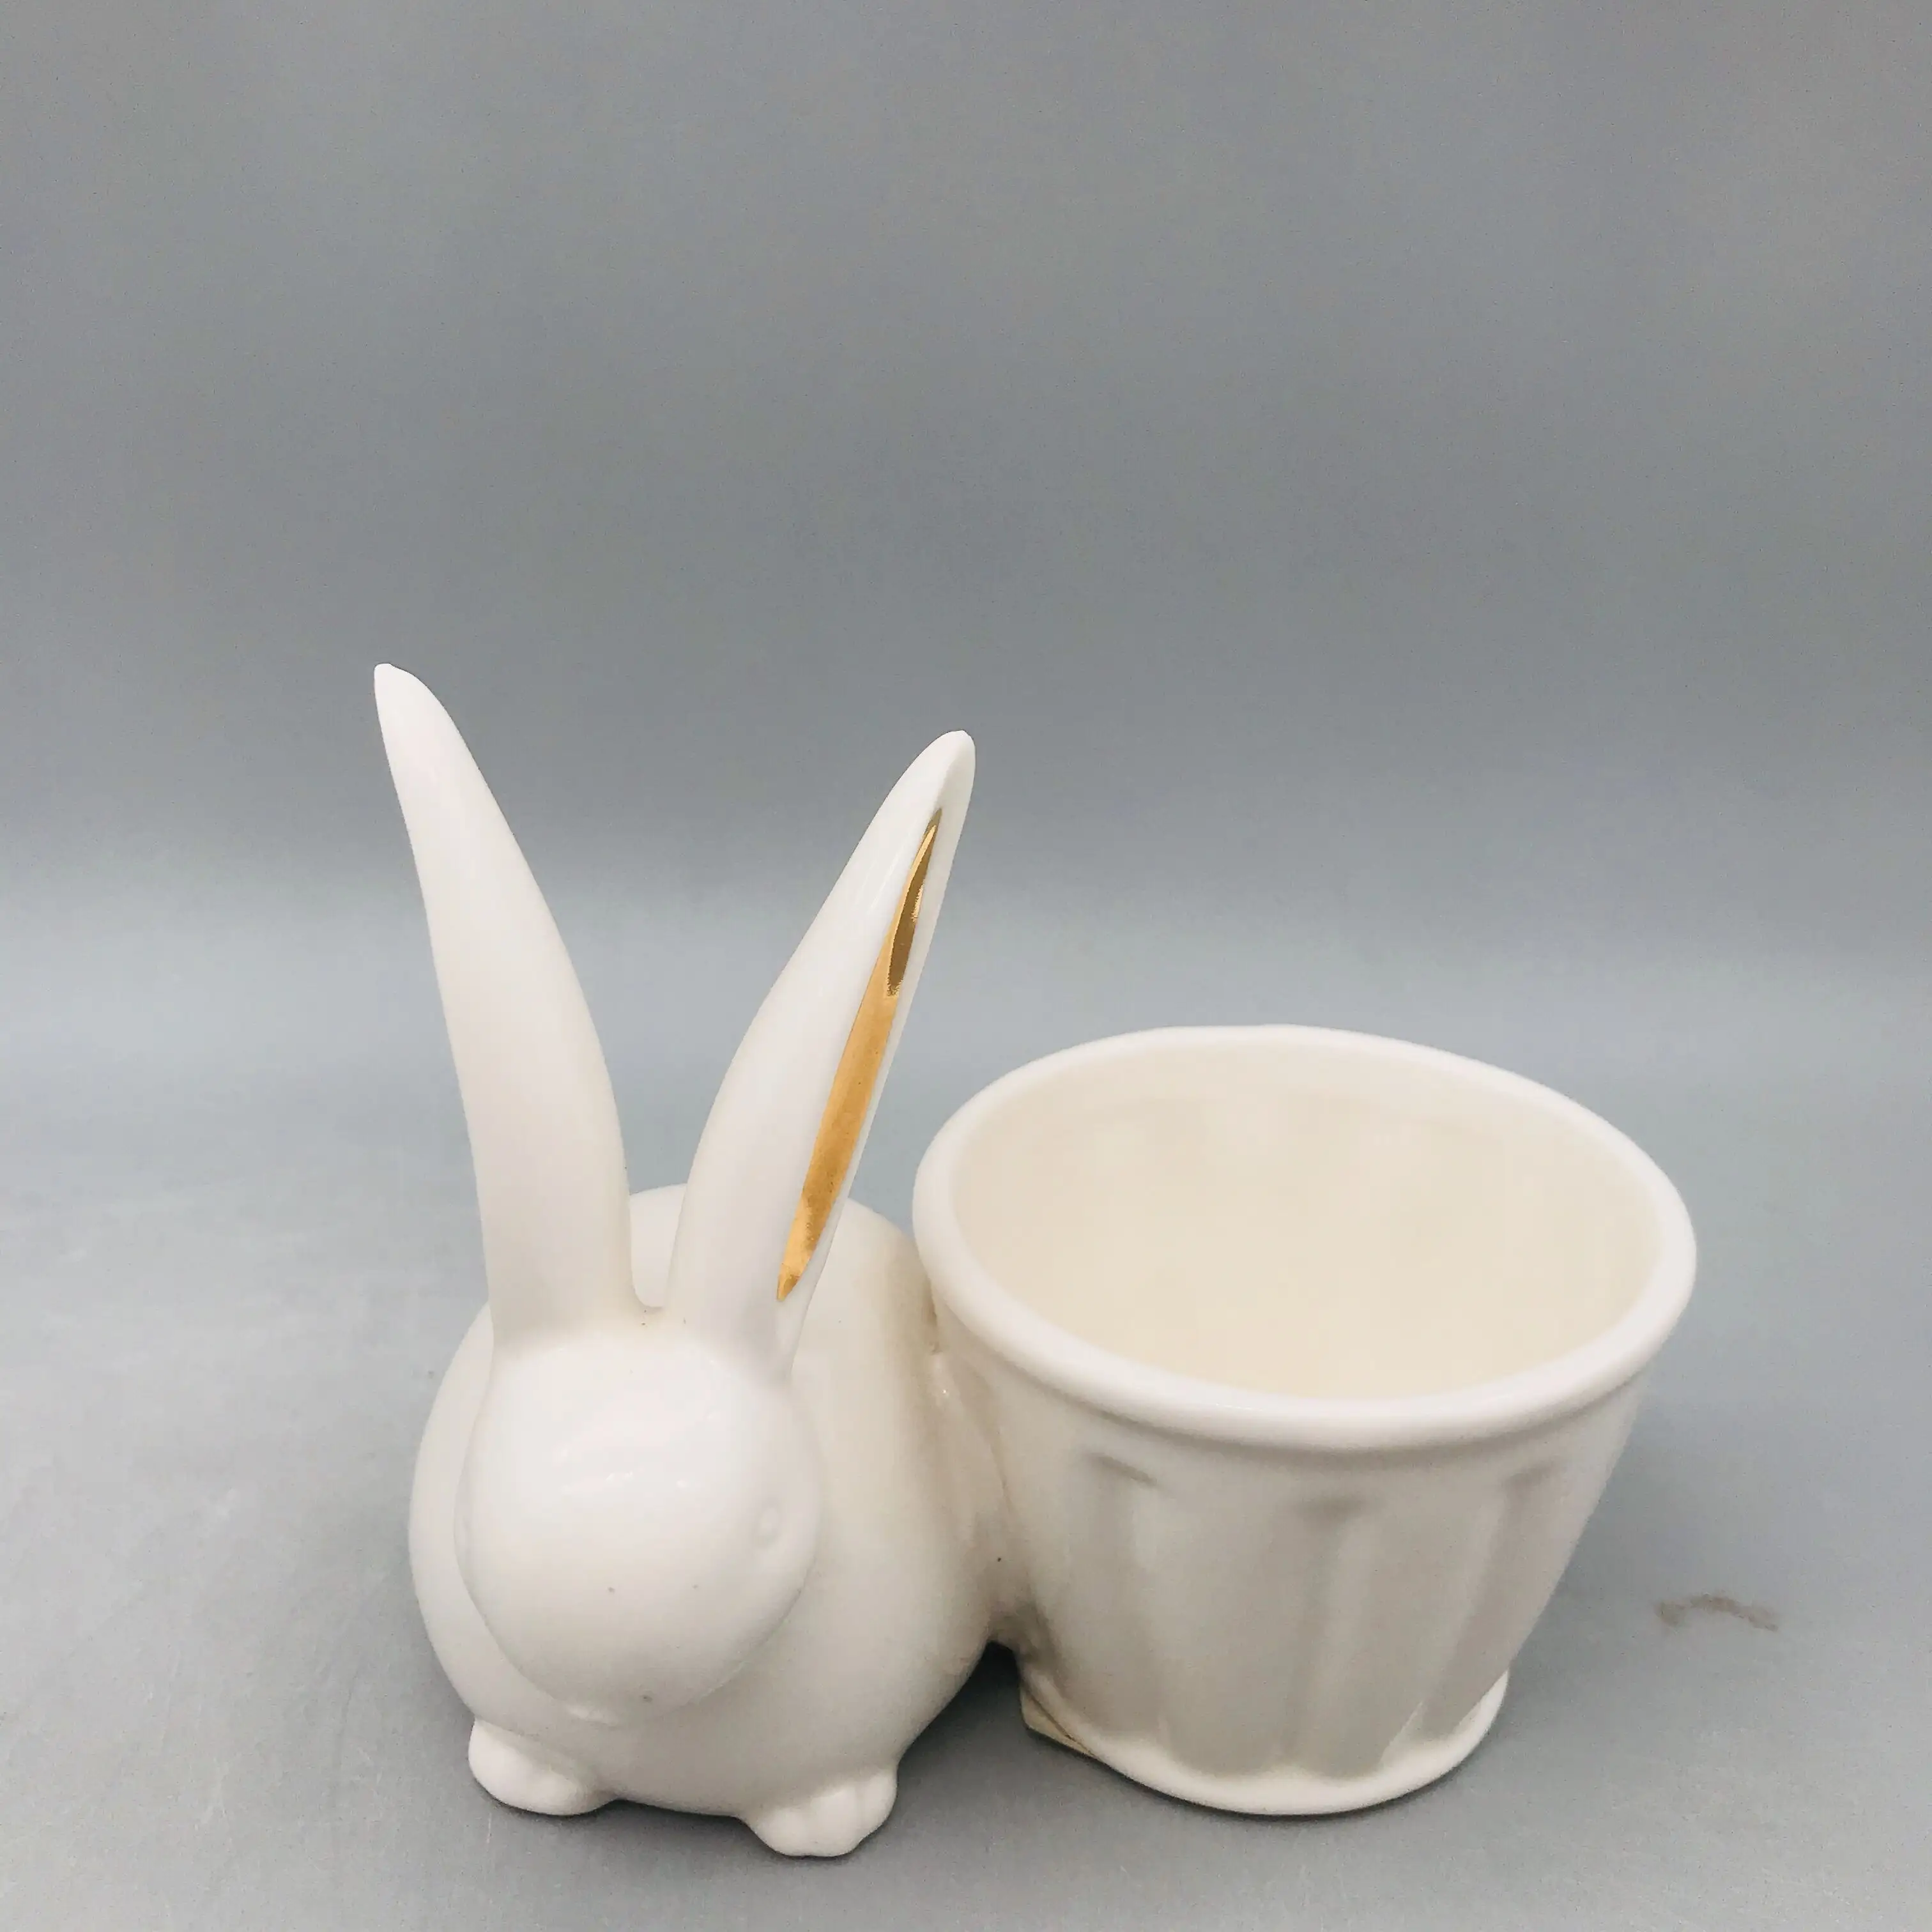 China manufacturer bunny decor white ceramic egg cup holder